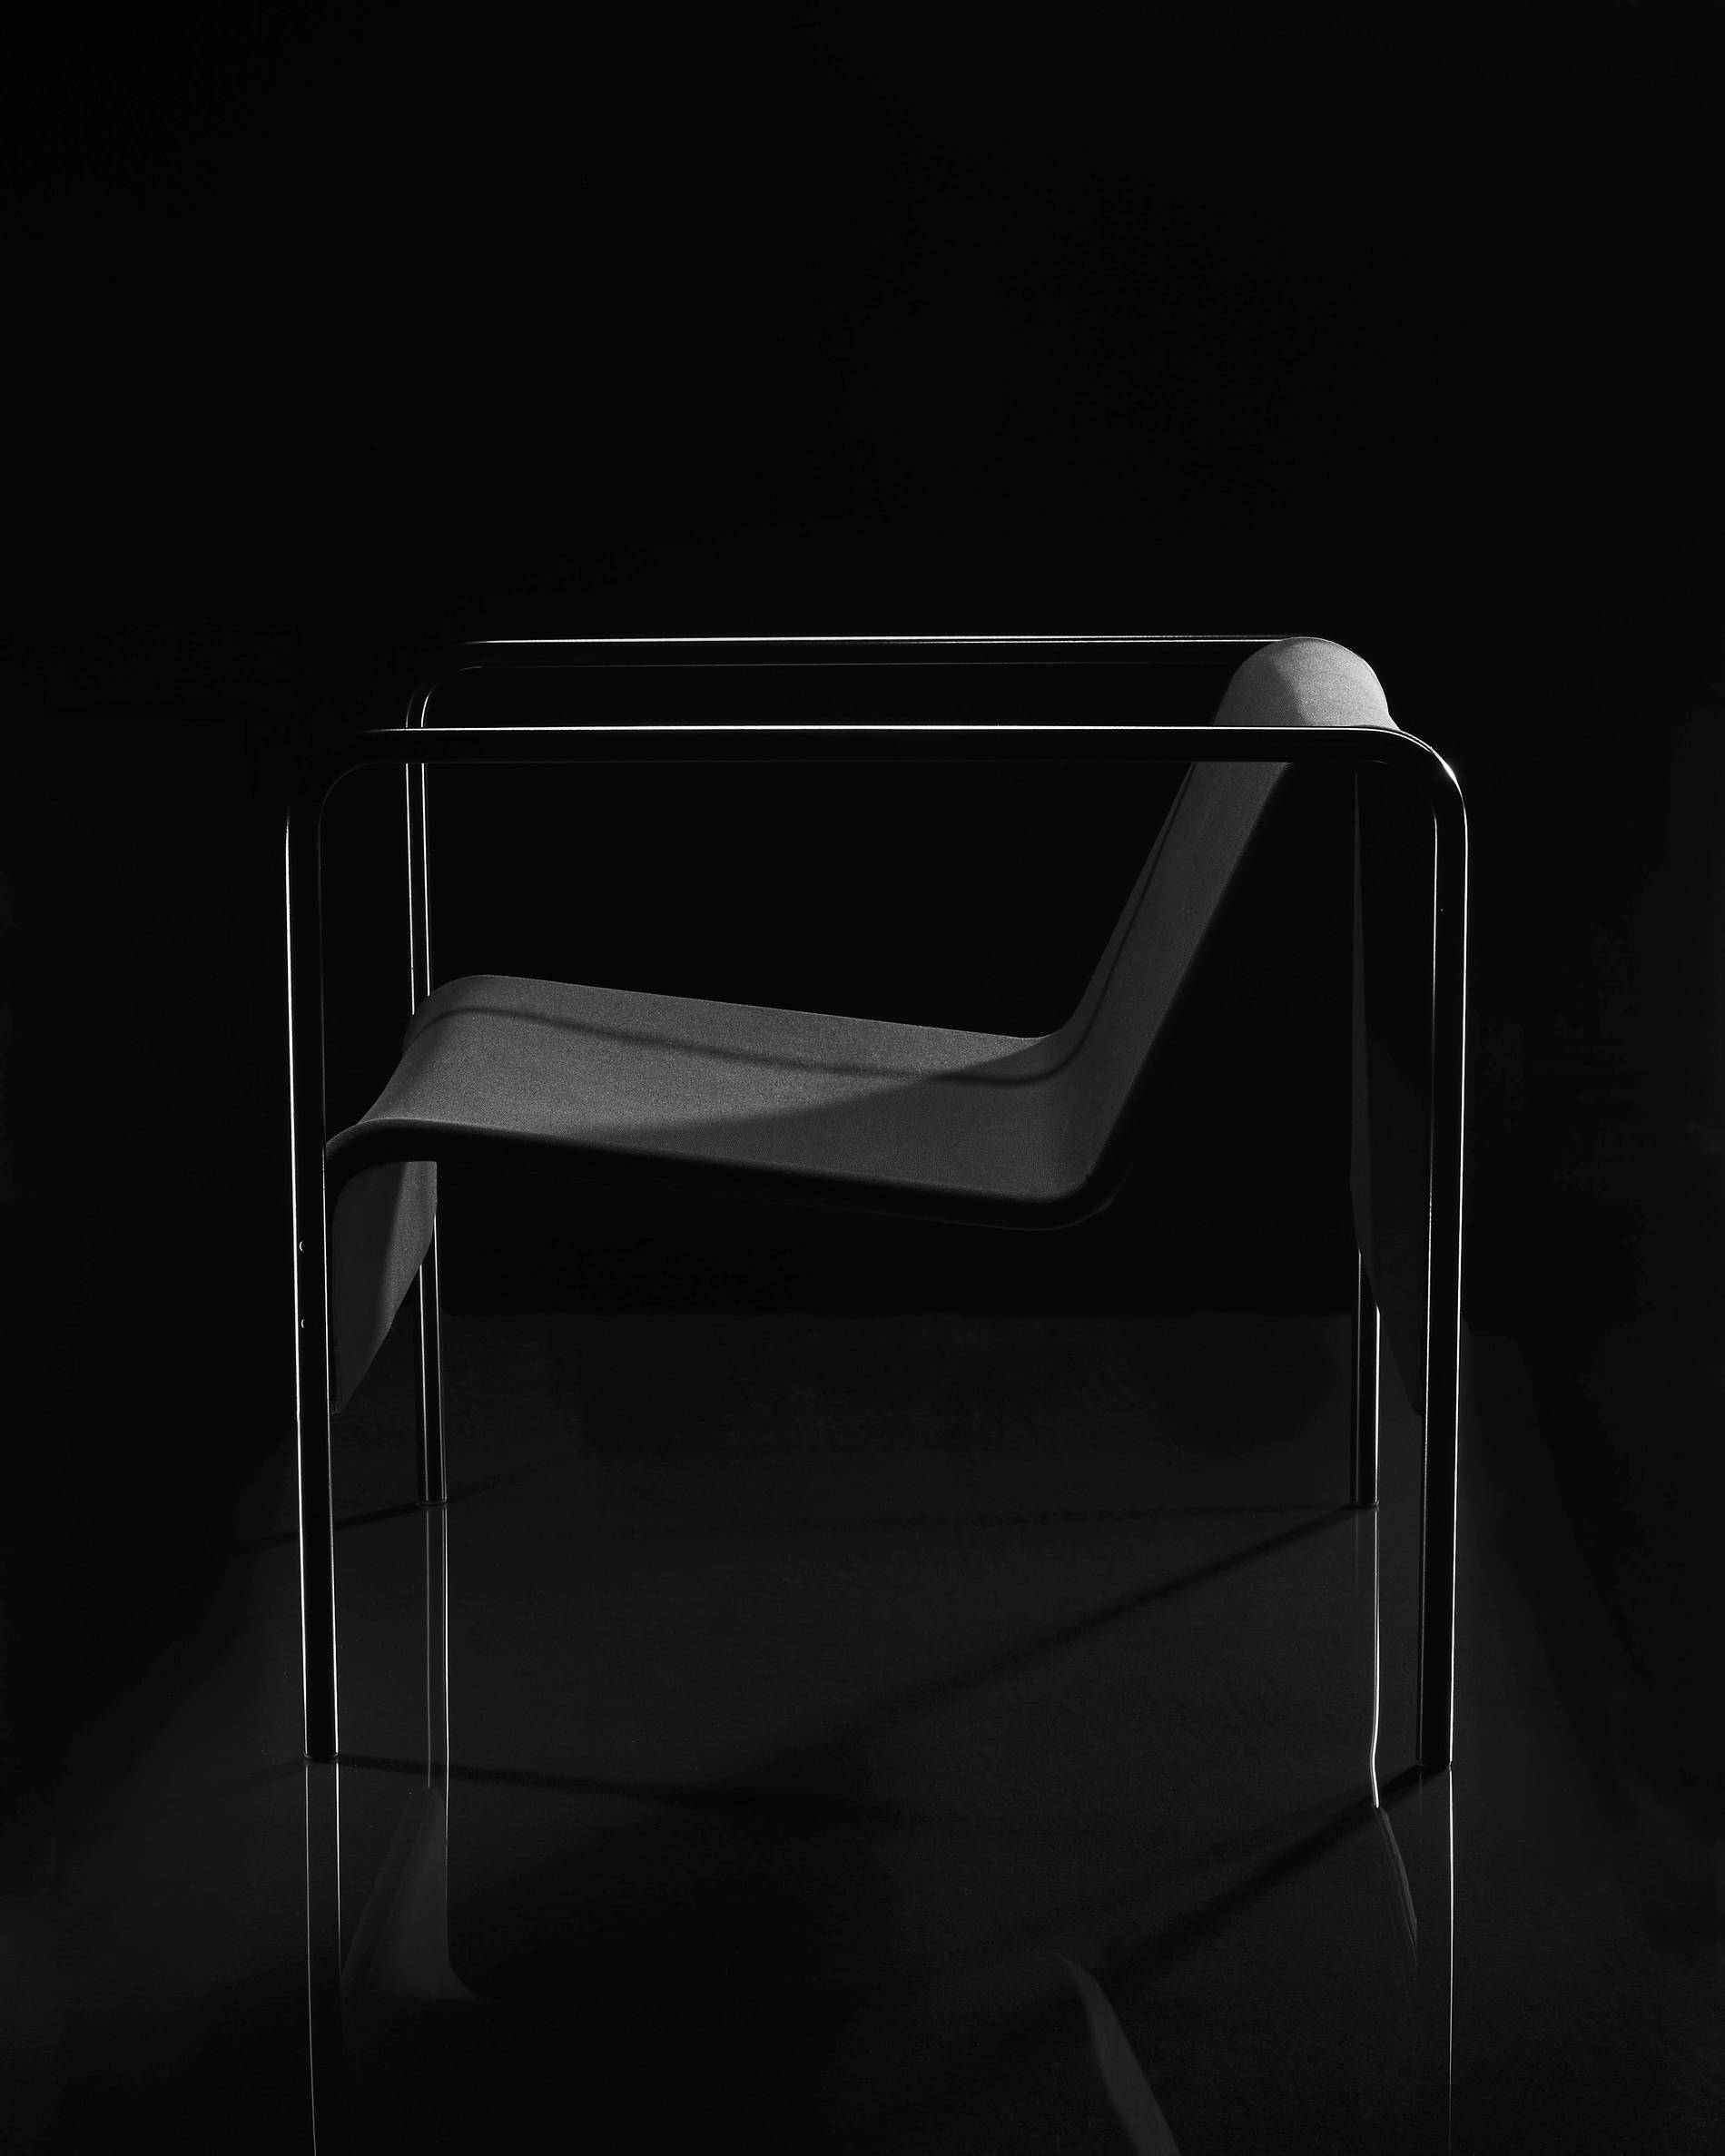 Swedish House Mafia for Ikea, Obergränsad collection Chair design